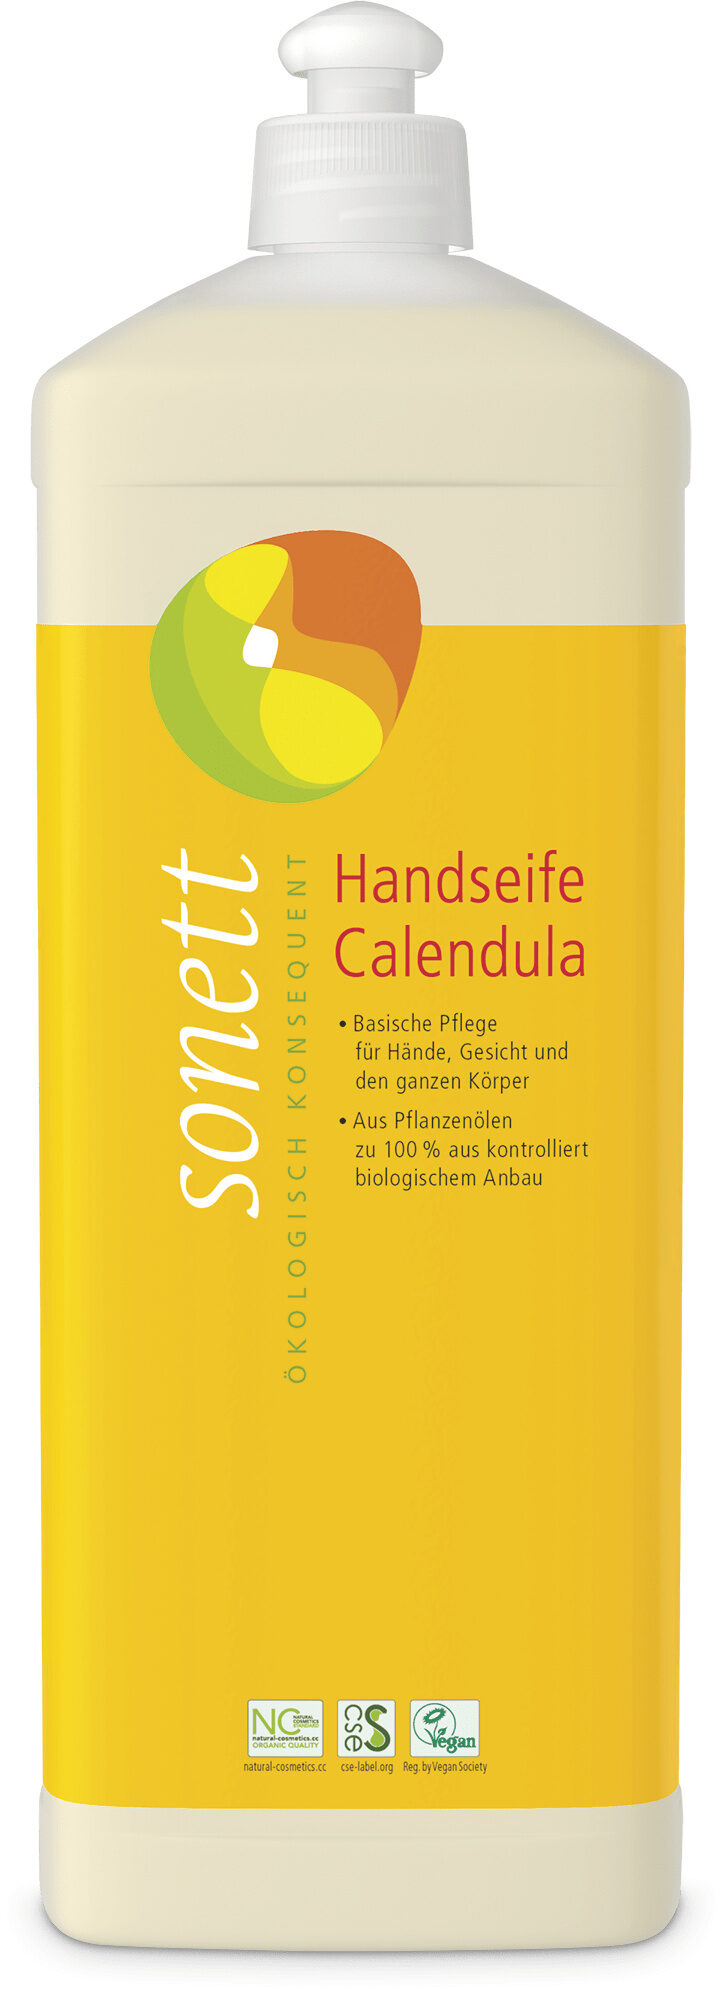 Handseife Calendula - Producto - es